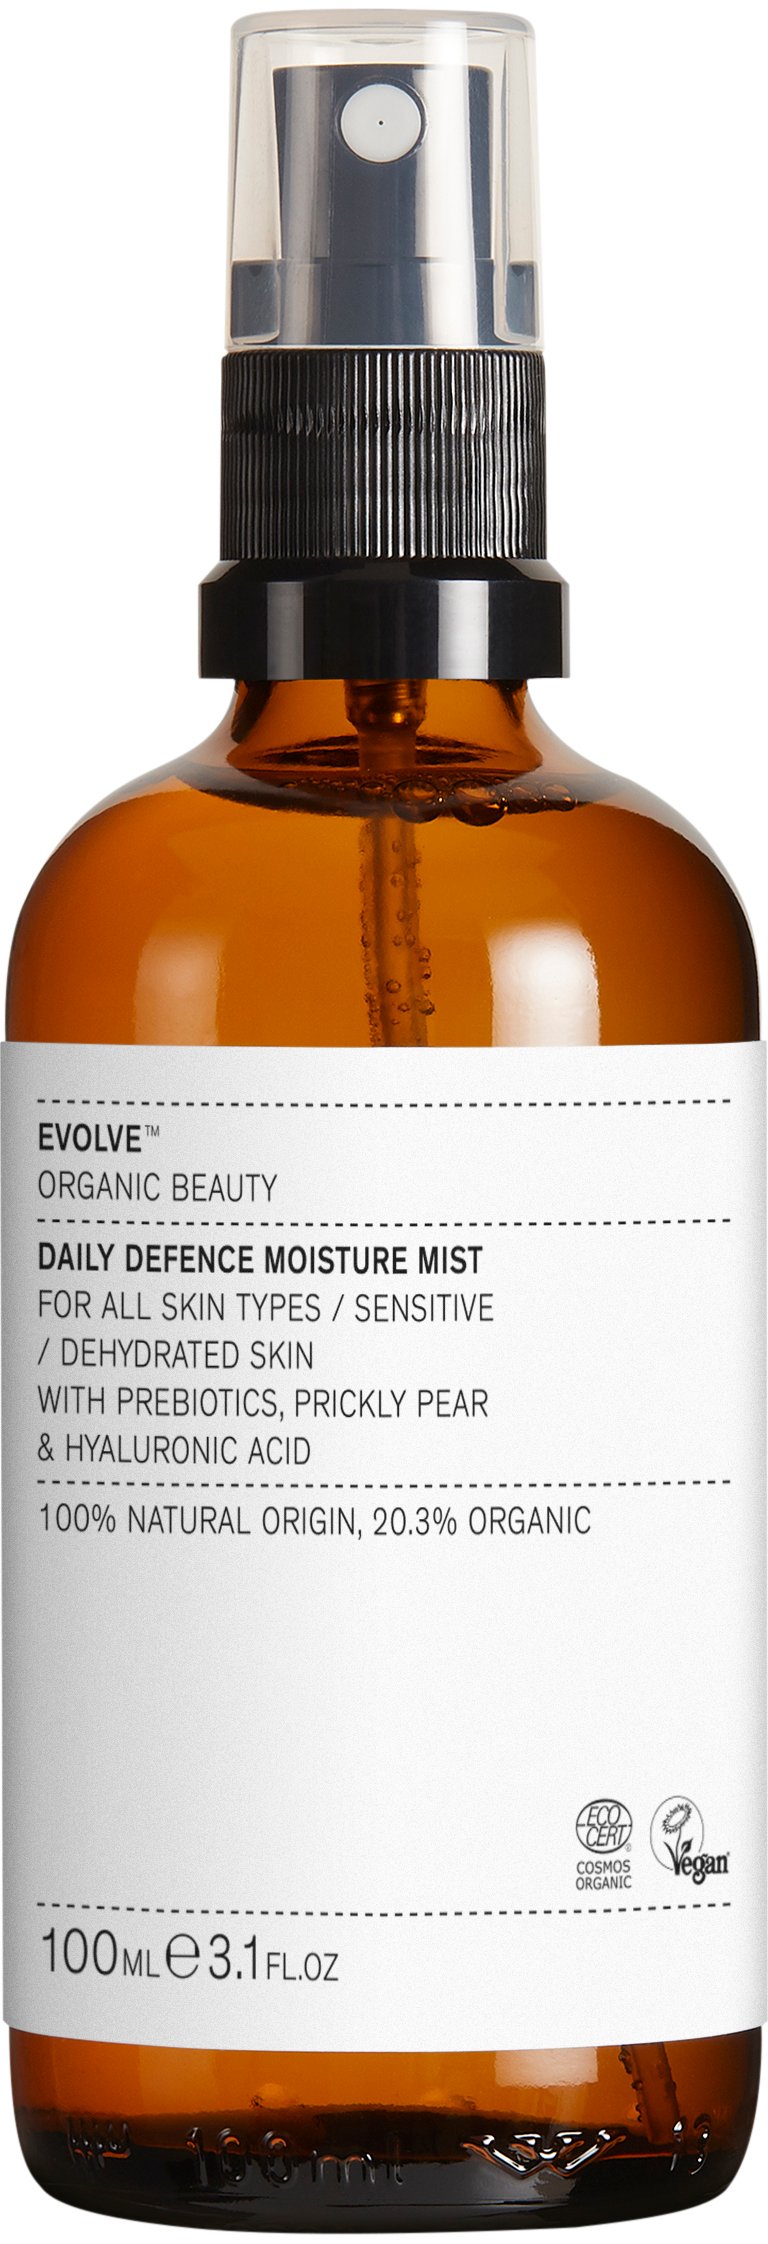 Evolve Organic Beauty Daily Defence Moisture Mist Prebiotic 100 ml